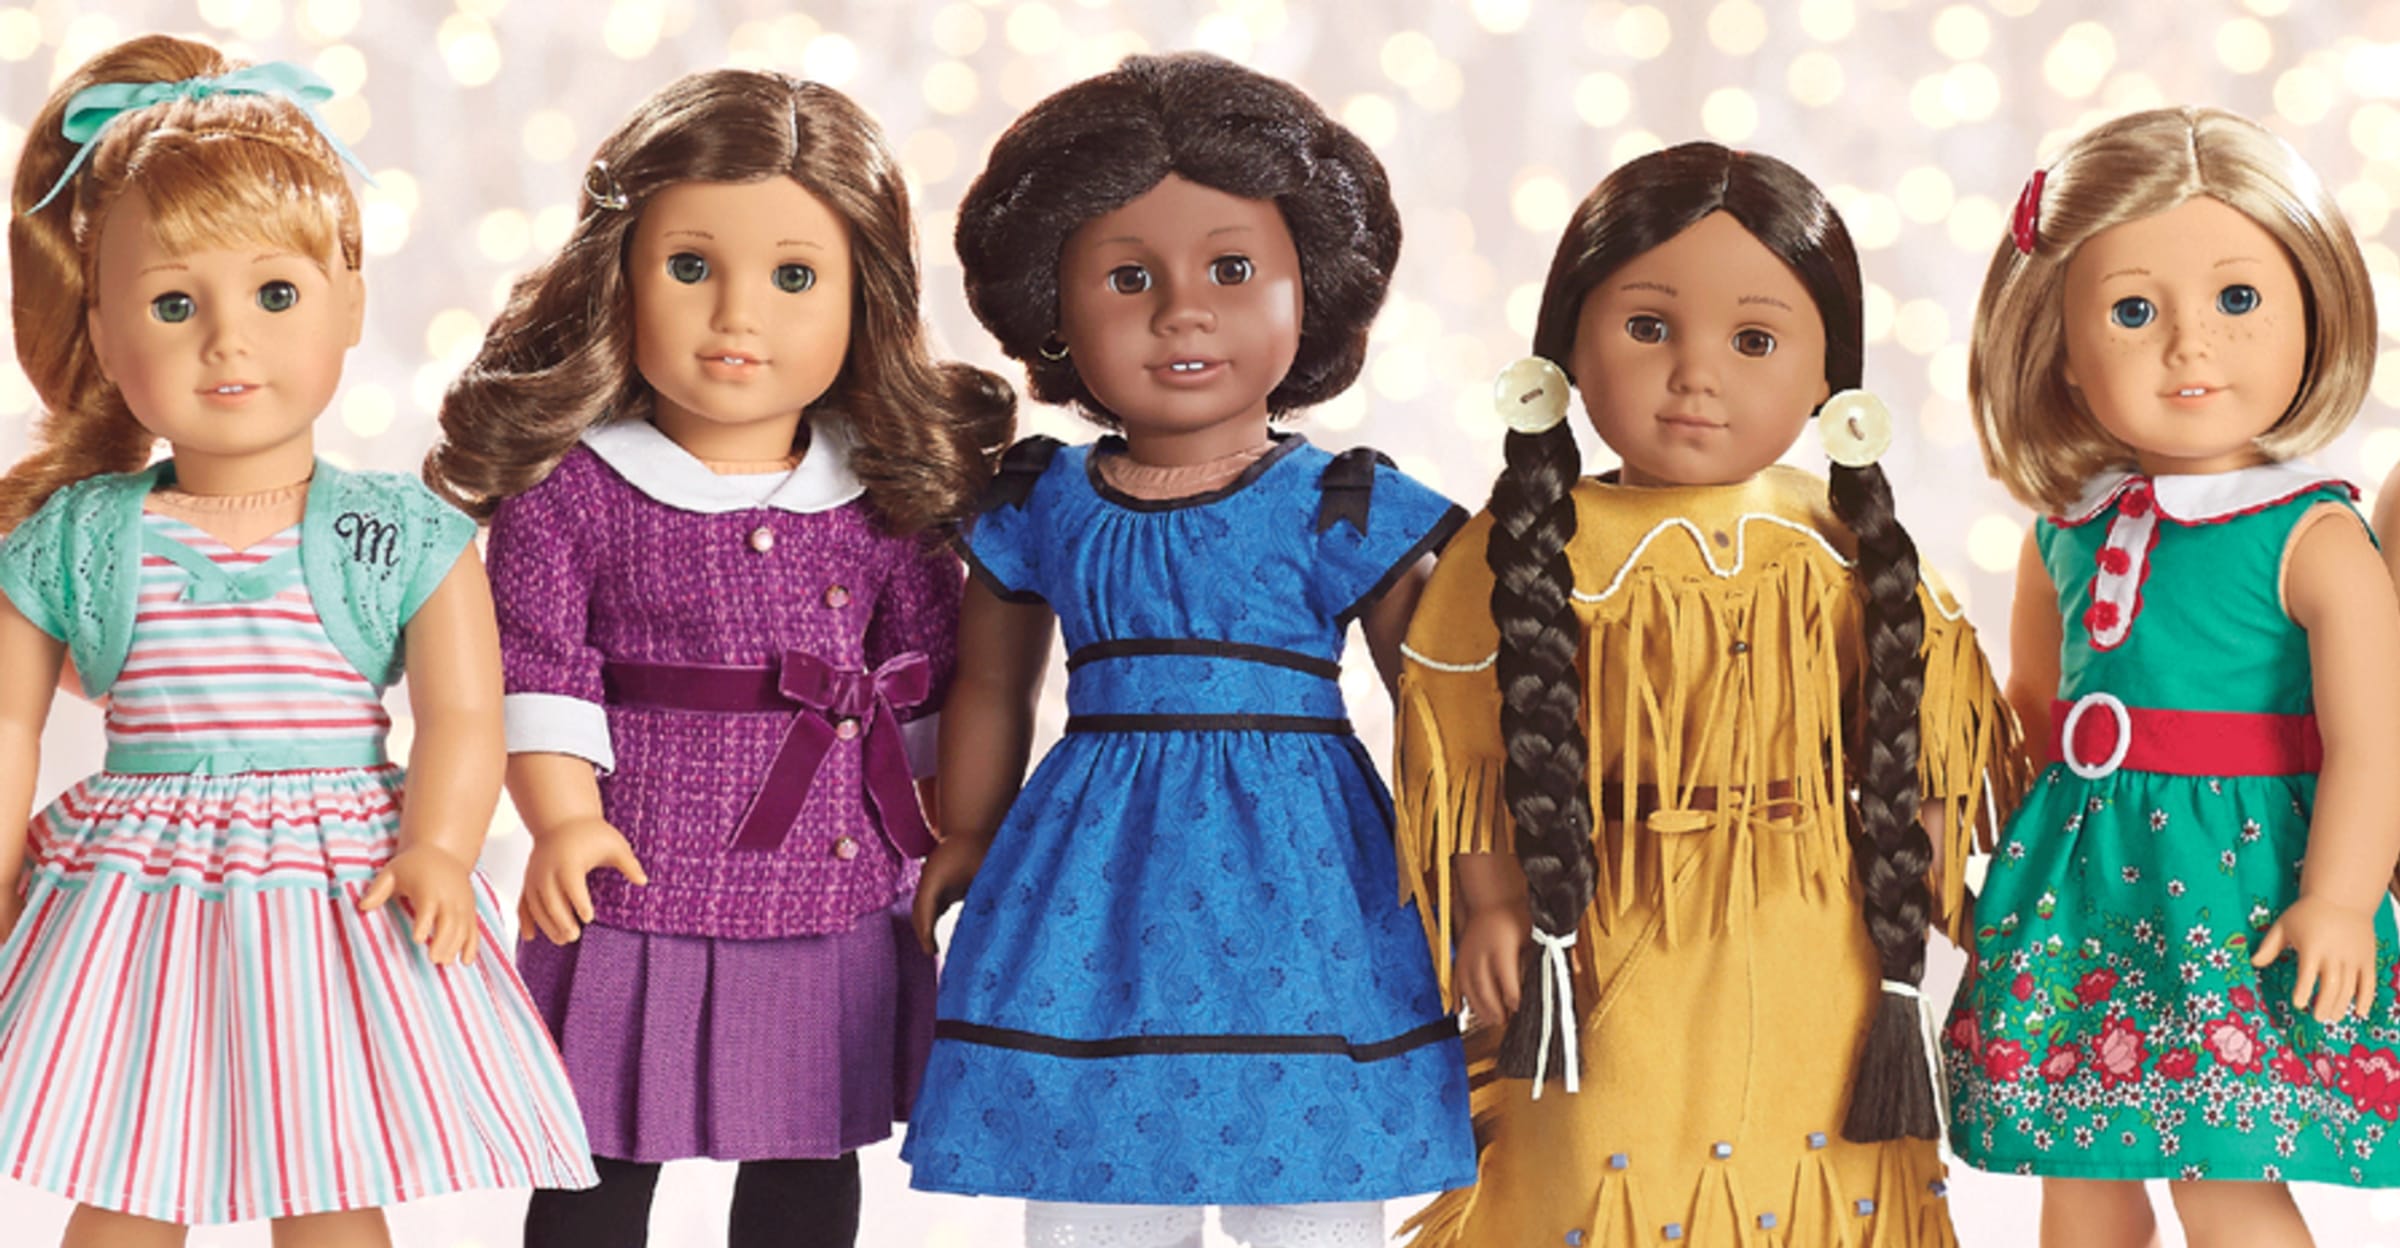 https://imgix.ranker.com/list_img_v2/5514/2705514/original/most-valuable-american-girl-dolls?fit=crop&fm=pjpg&q=80&dpr=2&w=1200&h=720